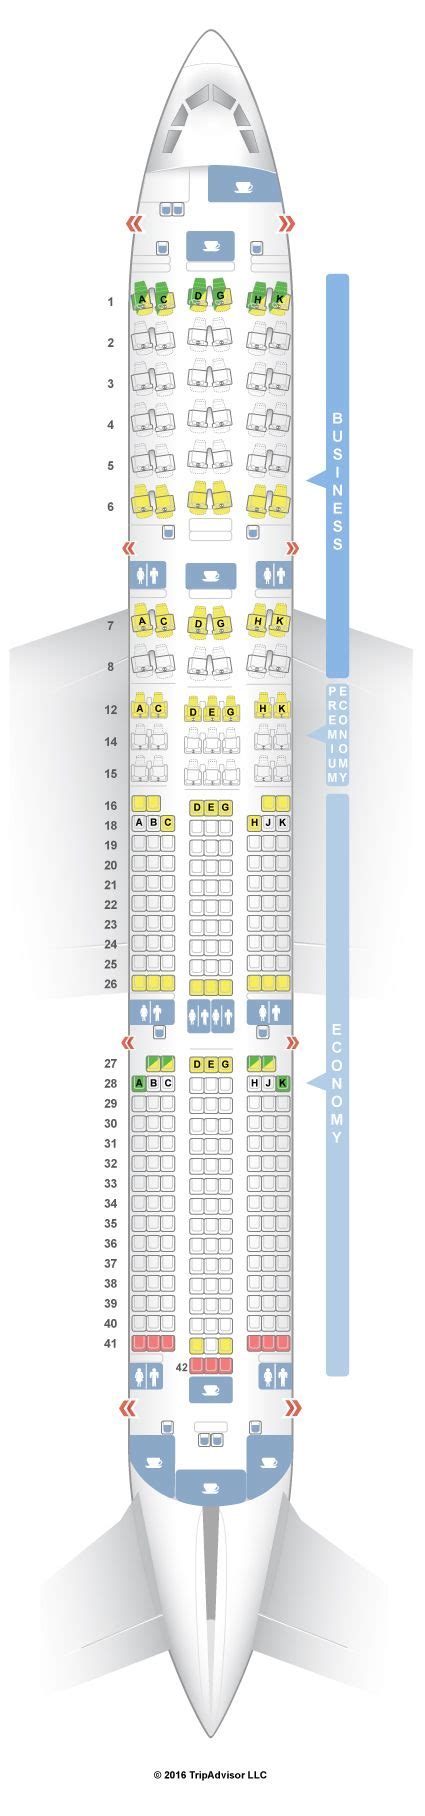 Airbus A350 900 Air France Seat Map